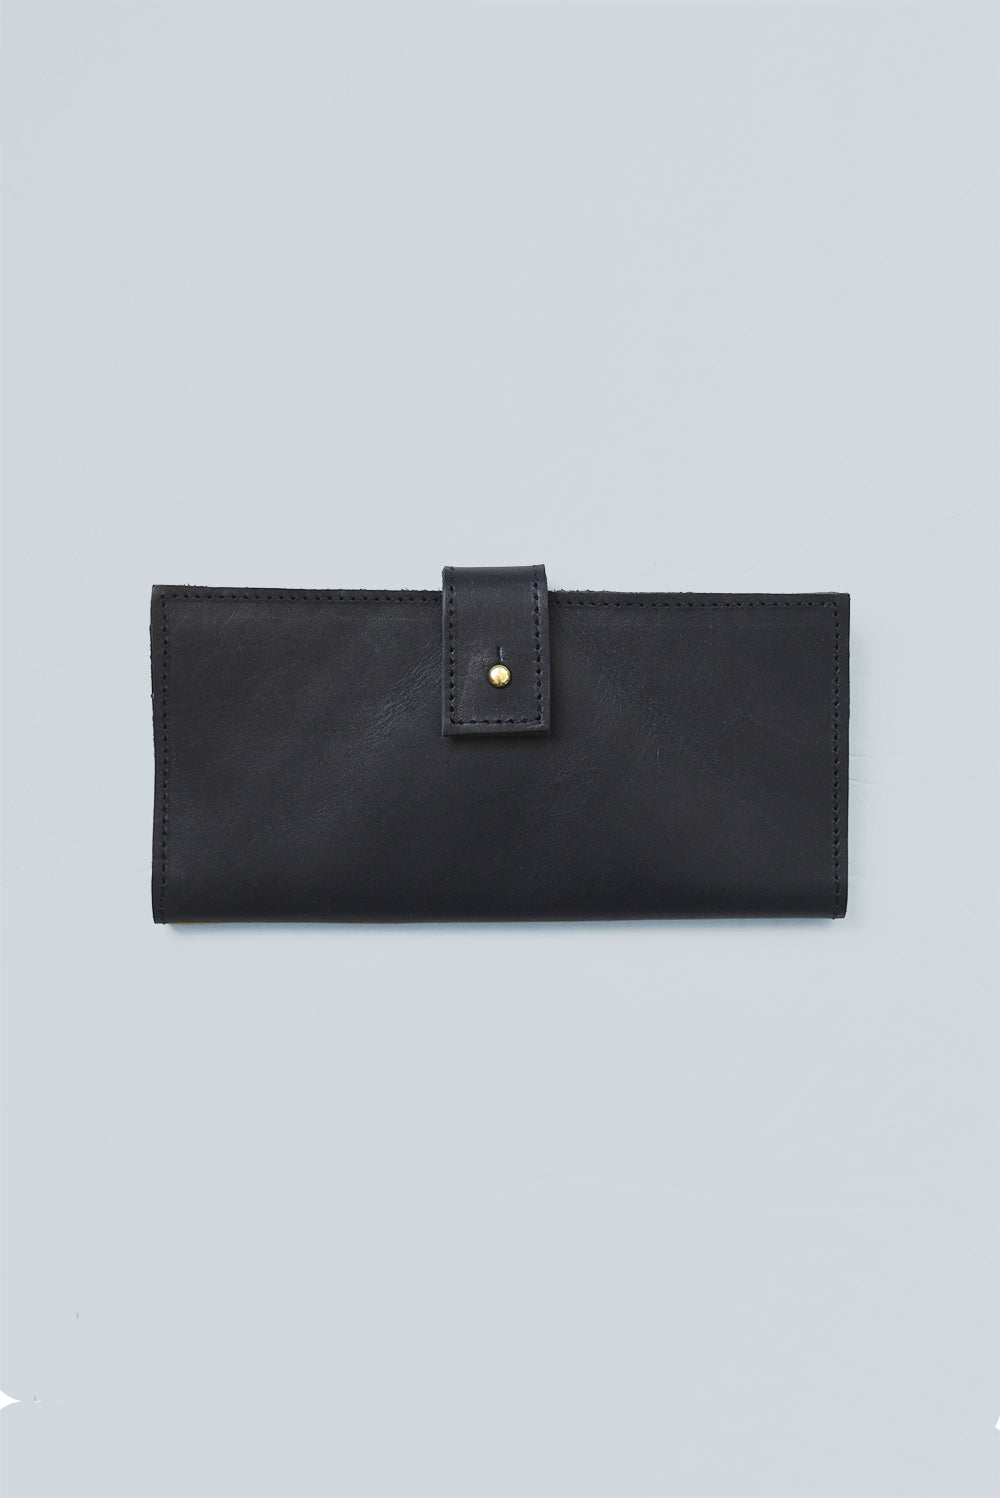 Custom white label black leather wallets for shops